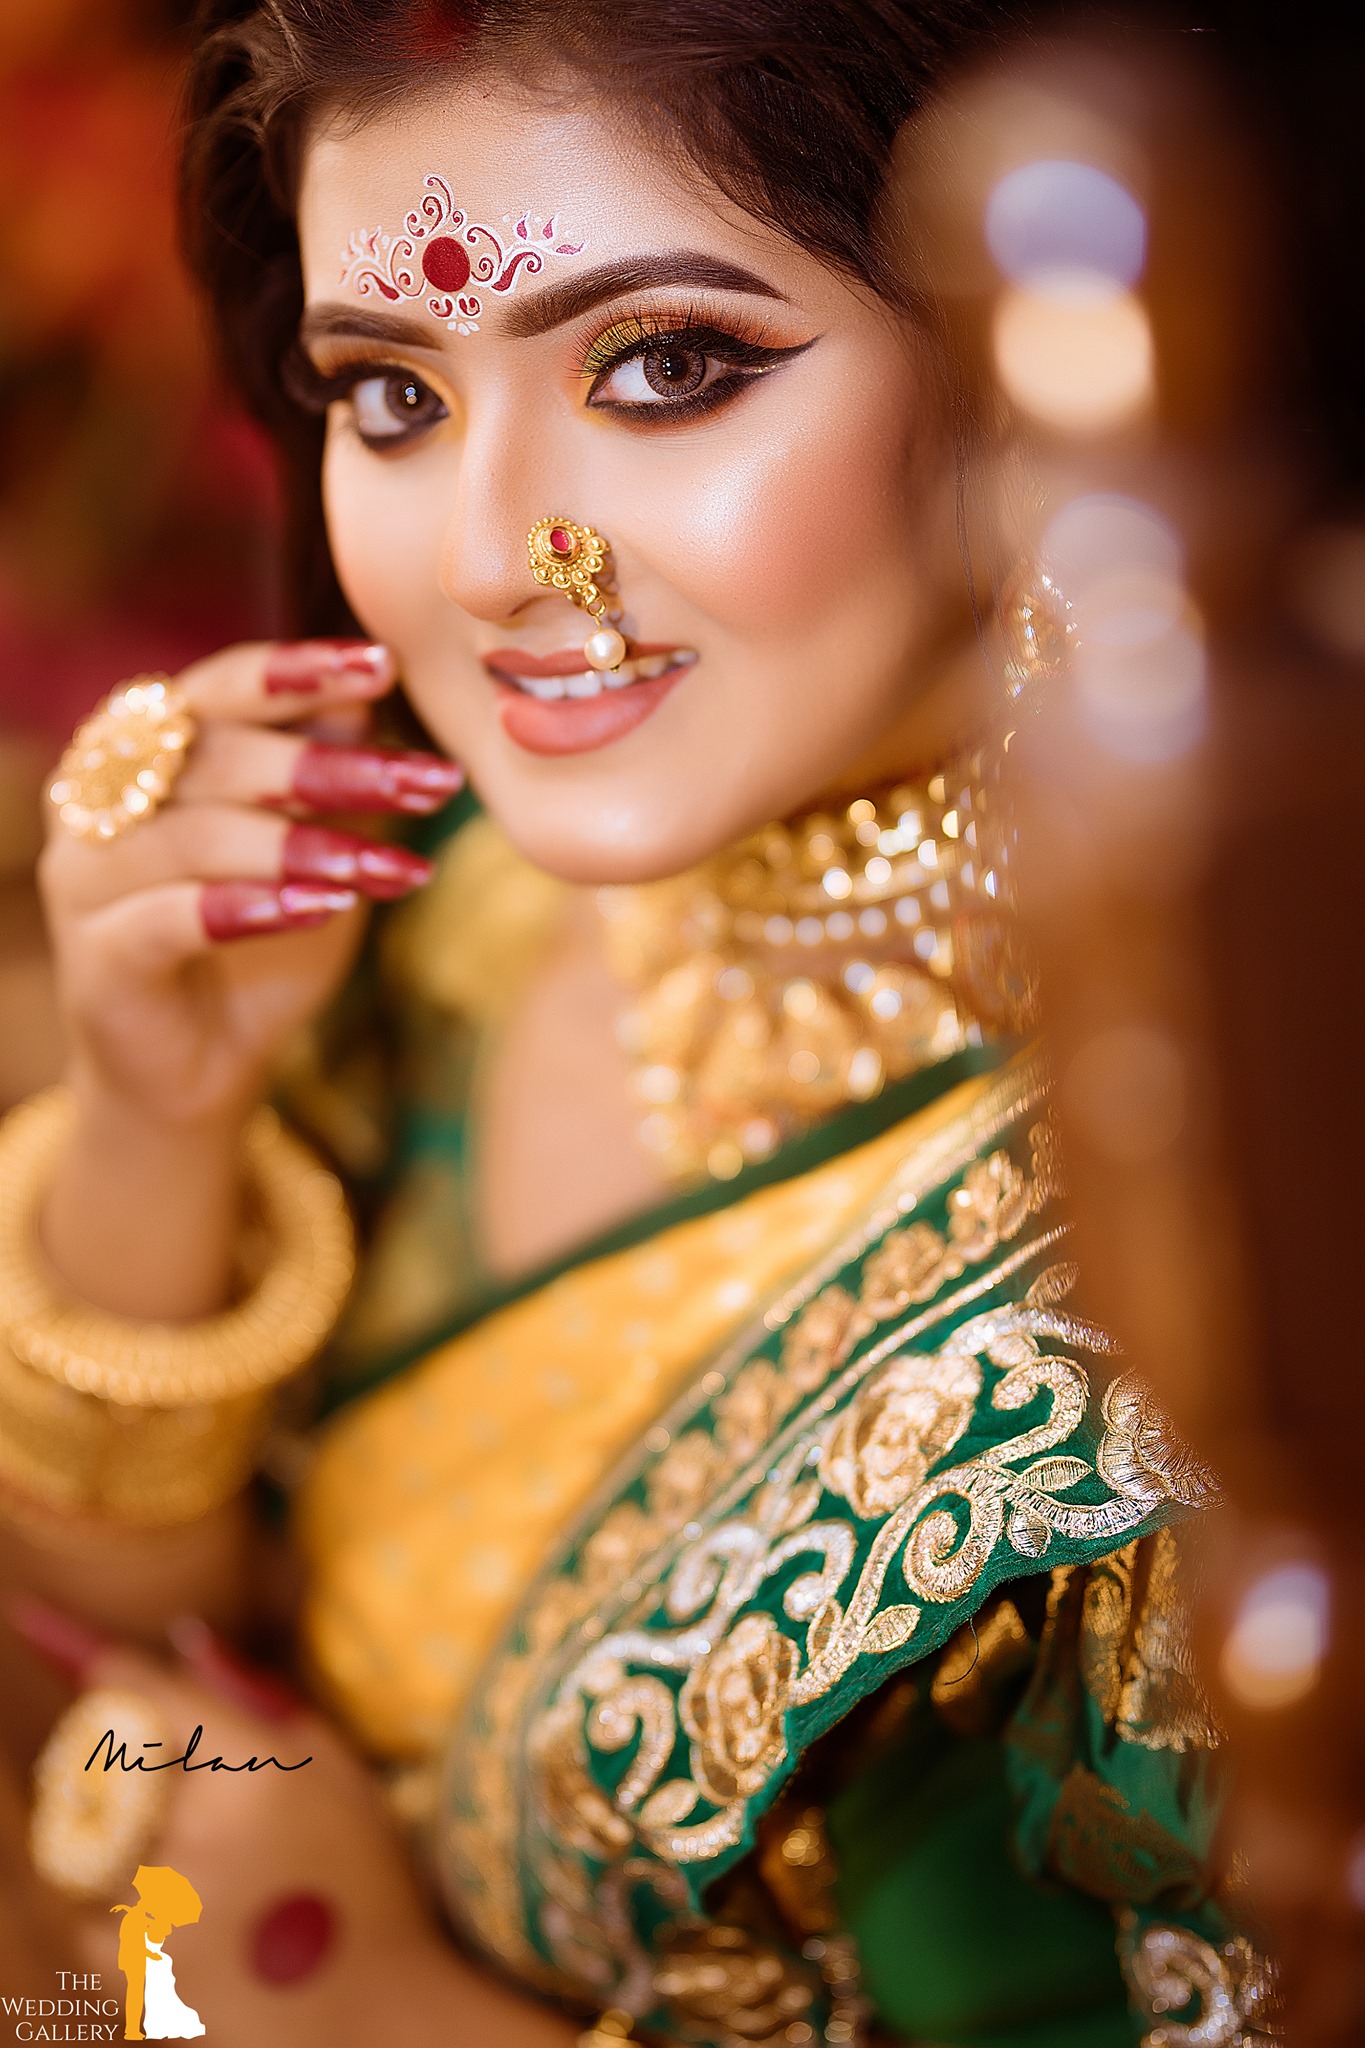 2018 Wedding Dress Trends For Brides – India's Wedding Blog